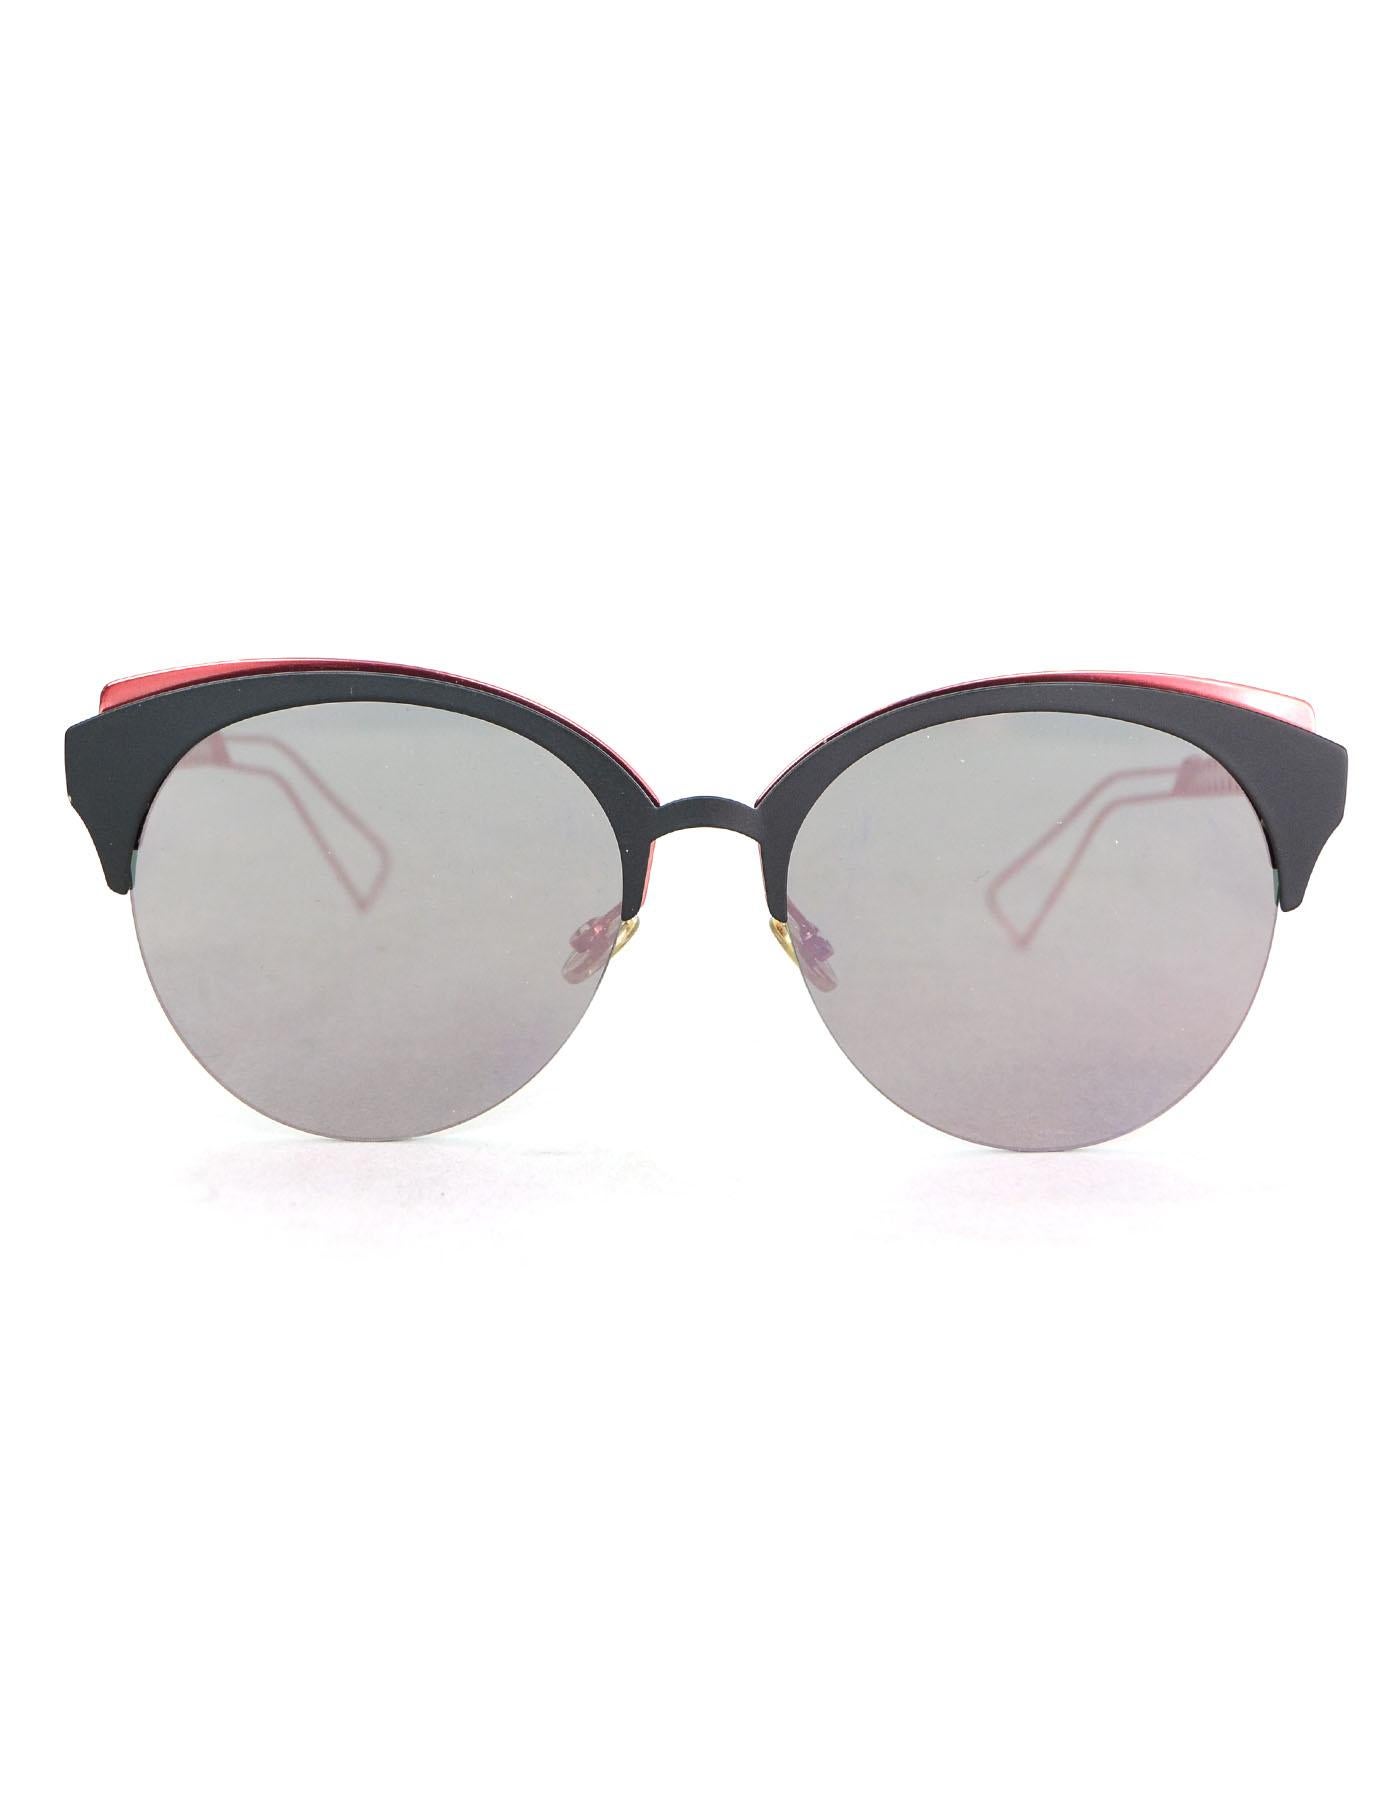 Beige Christian Dior Pink & Black Diorama Mirrored Sunglasses with Case